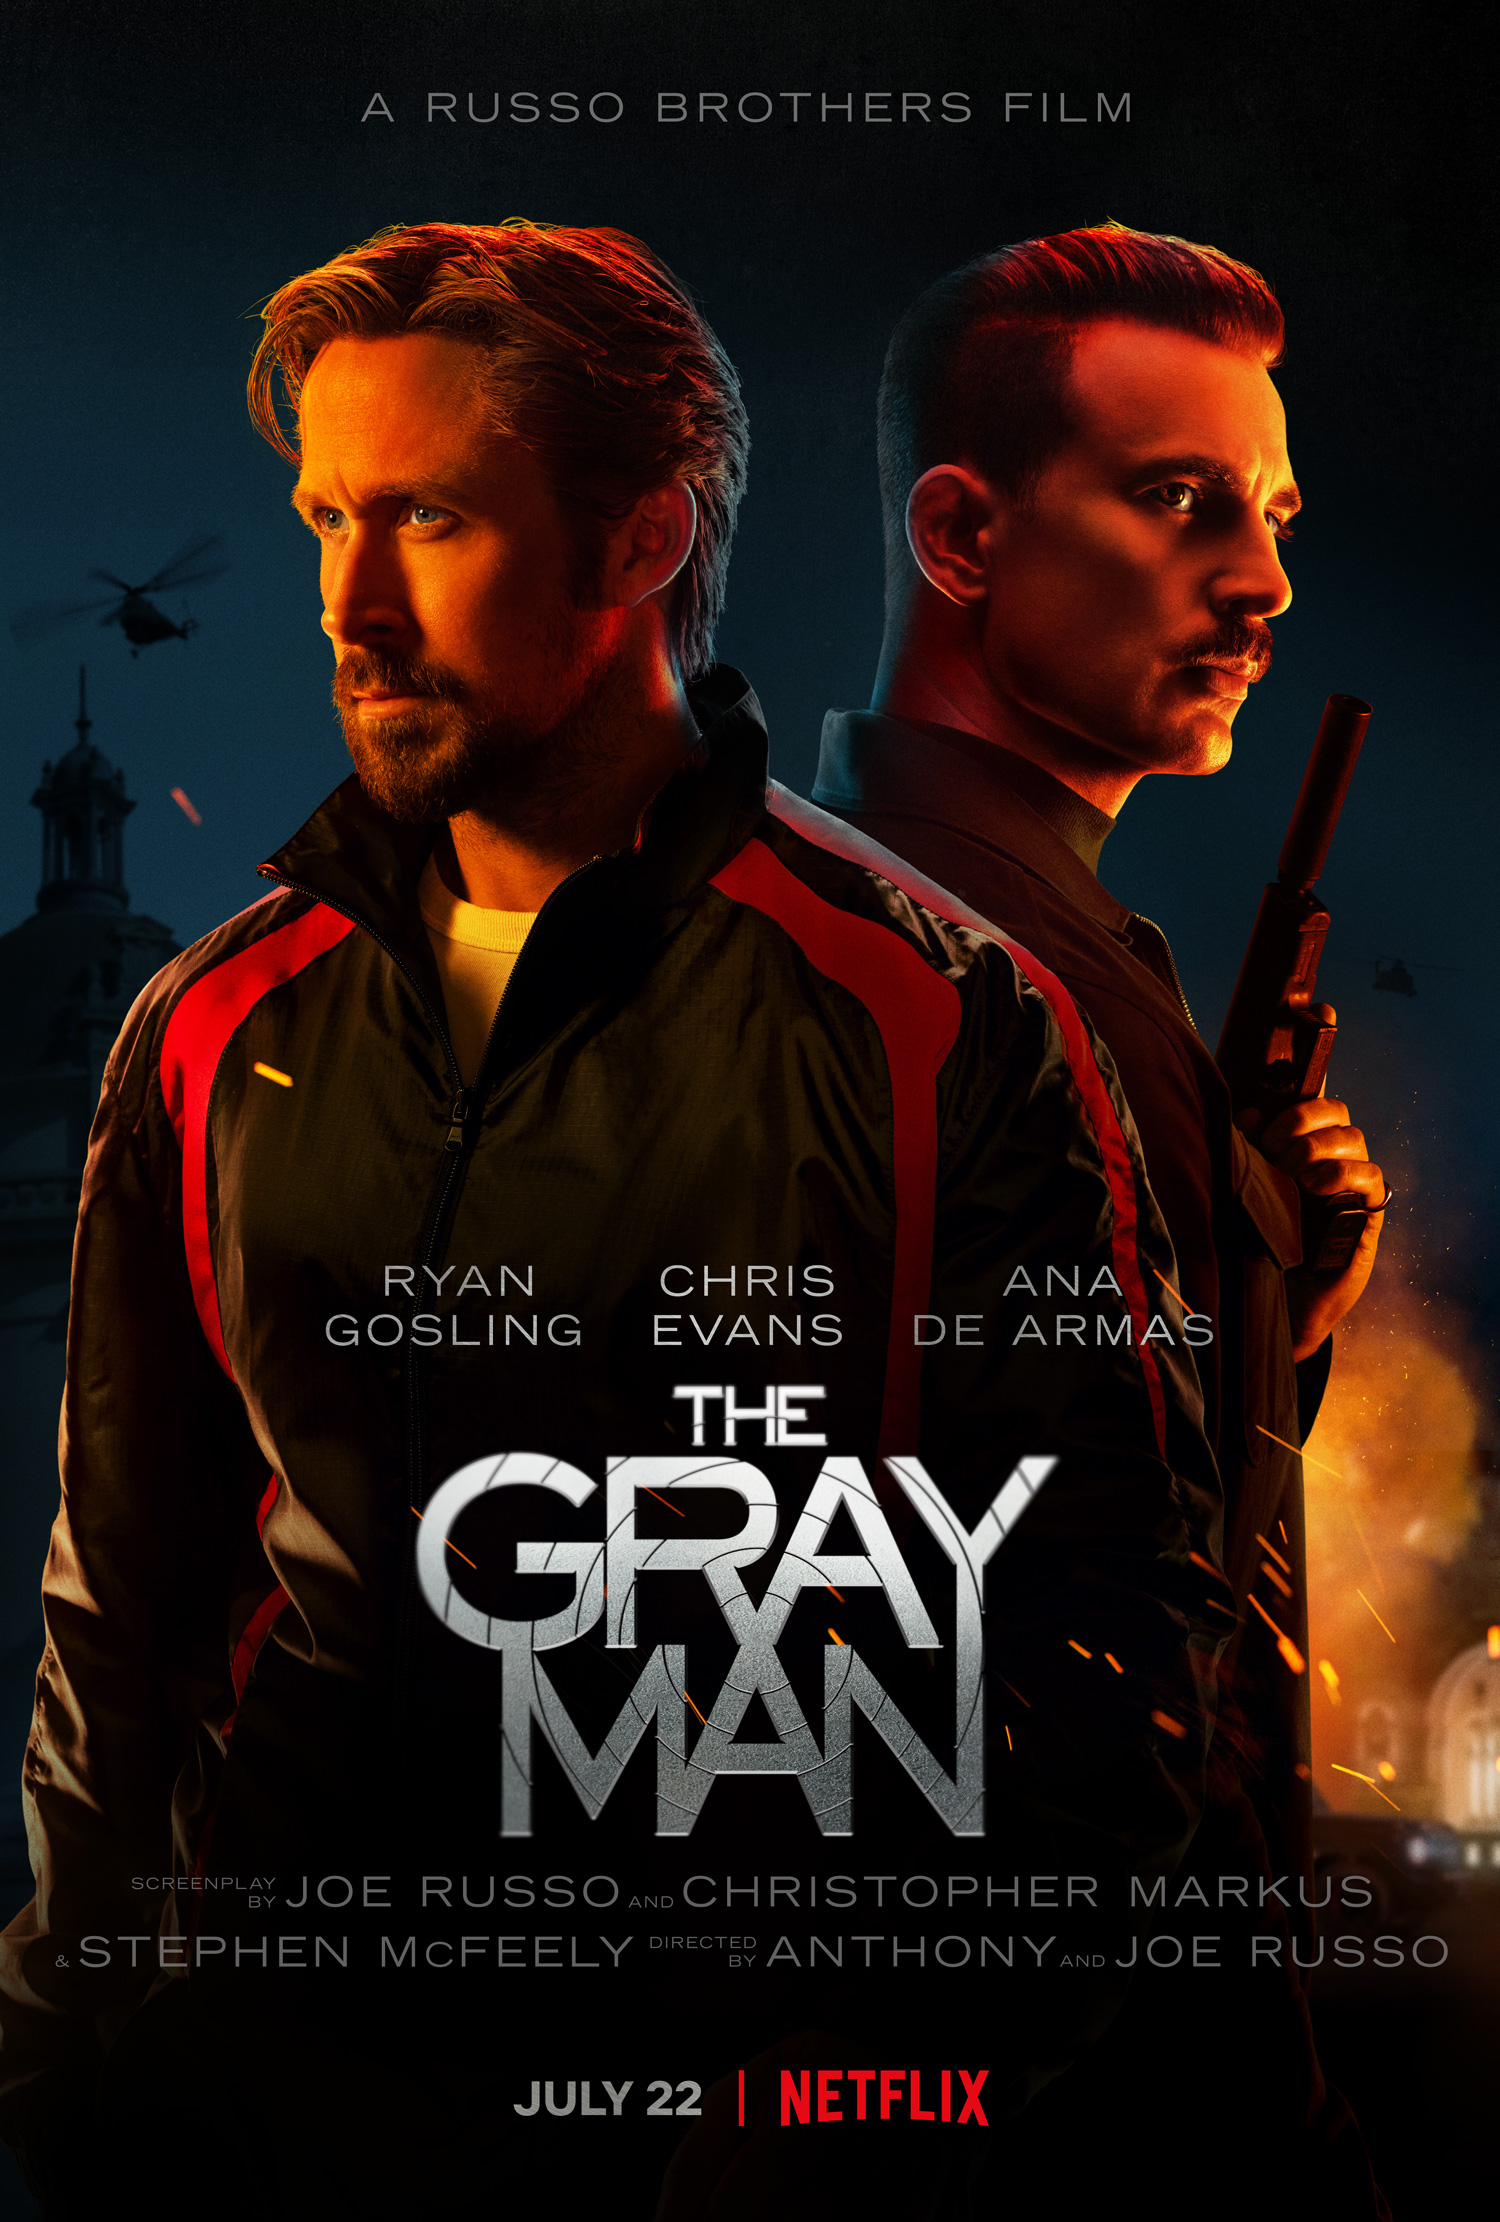 THE GRAY MAN World Premiere Red Carpet Rundown - Tom + Lorenzo